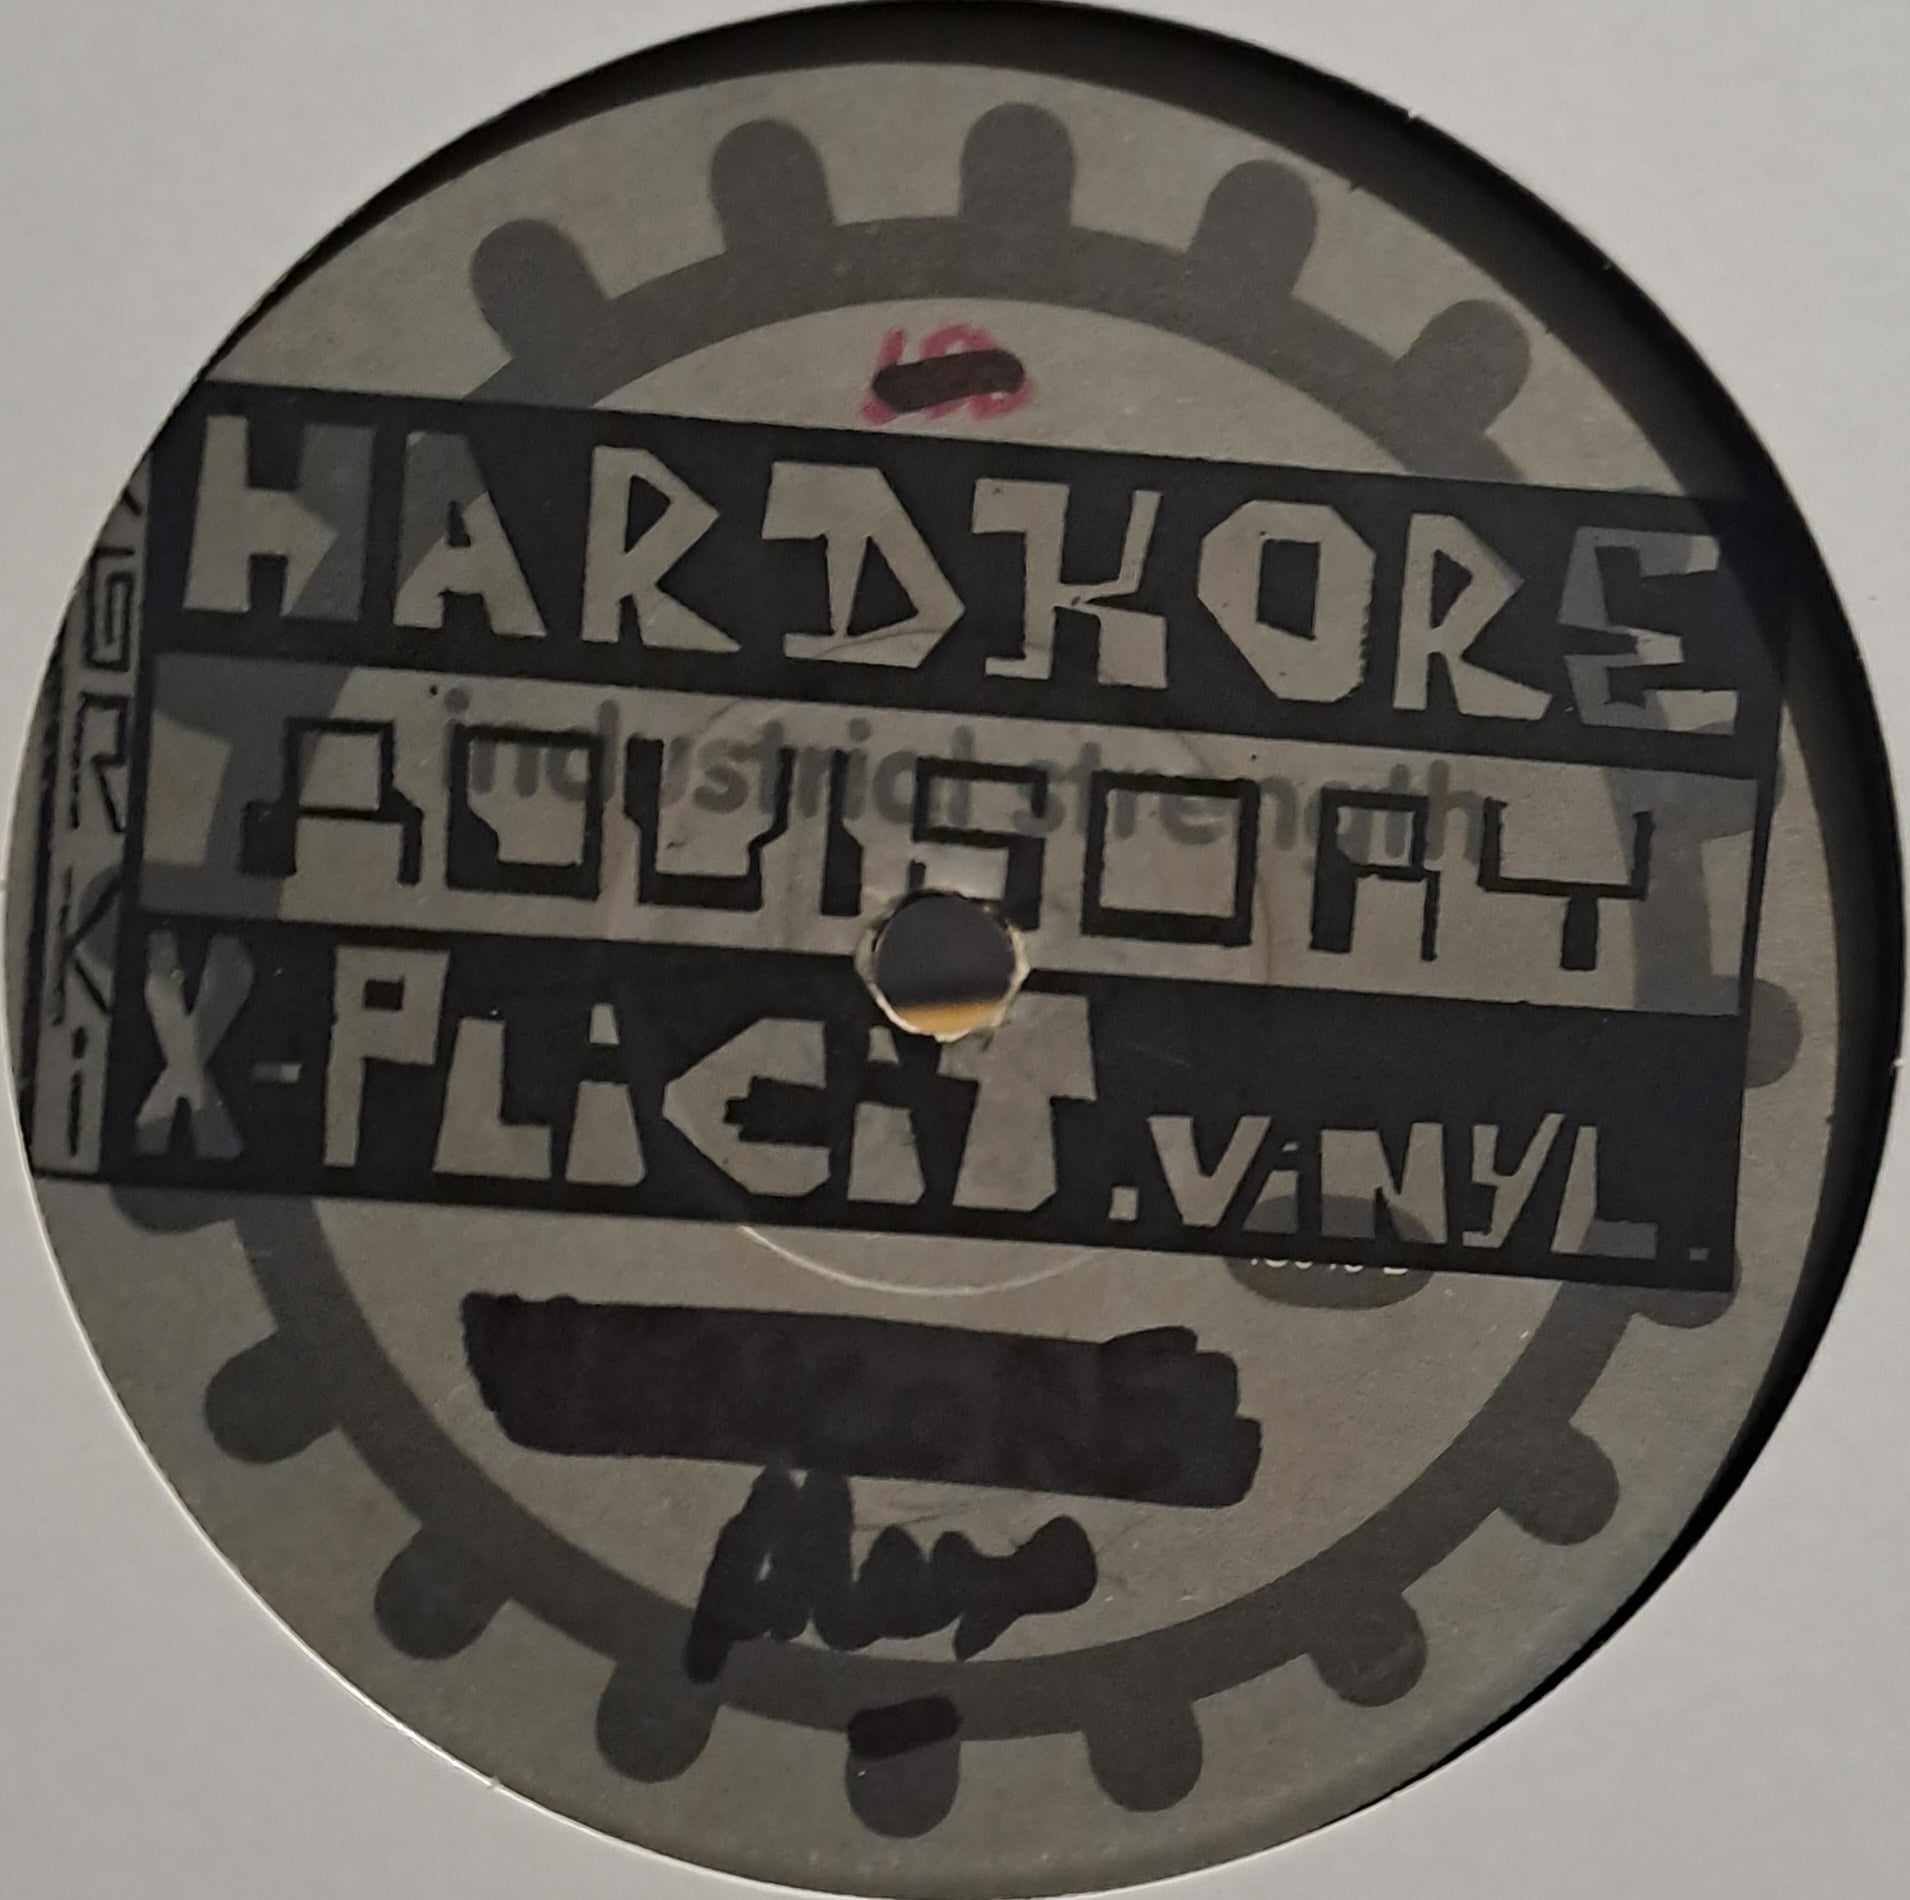 Industrial Strength Records 045 - vinyle hardcore